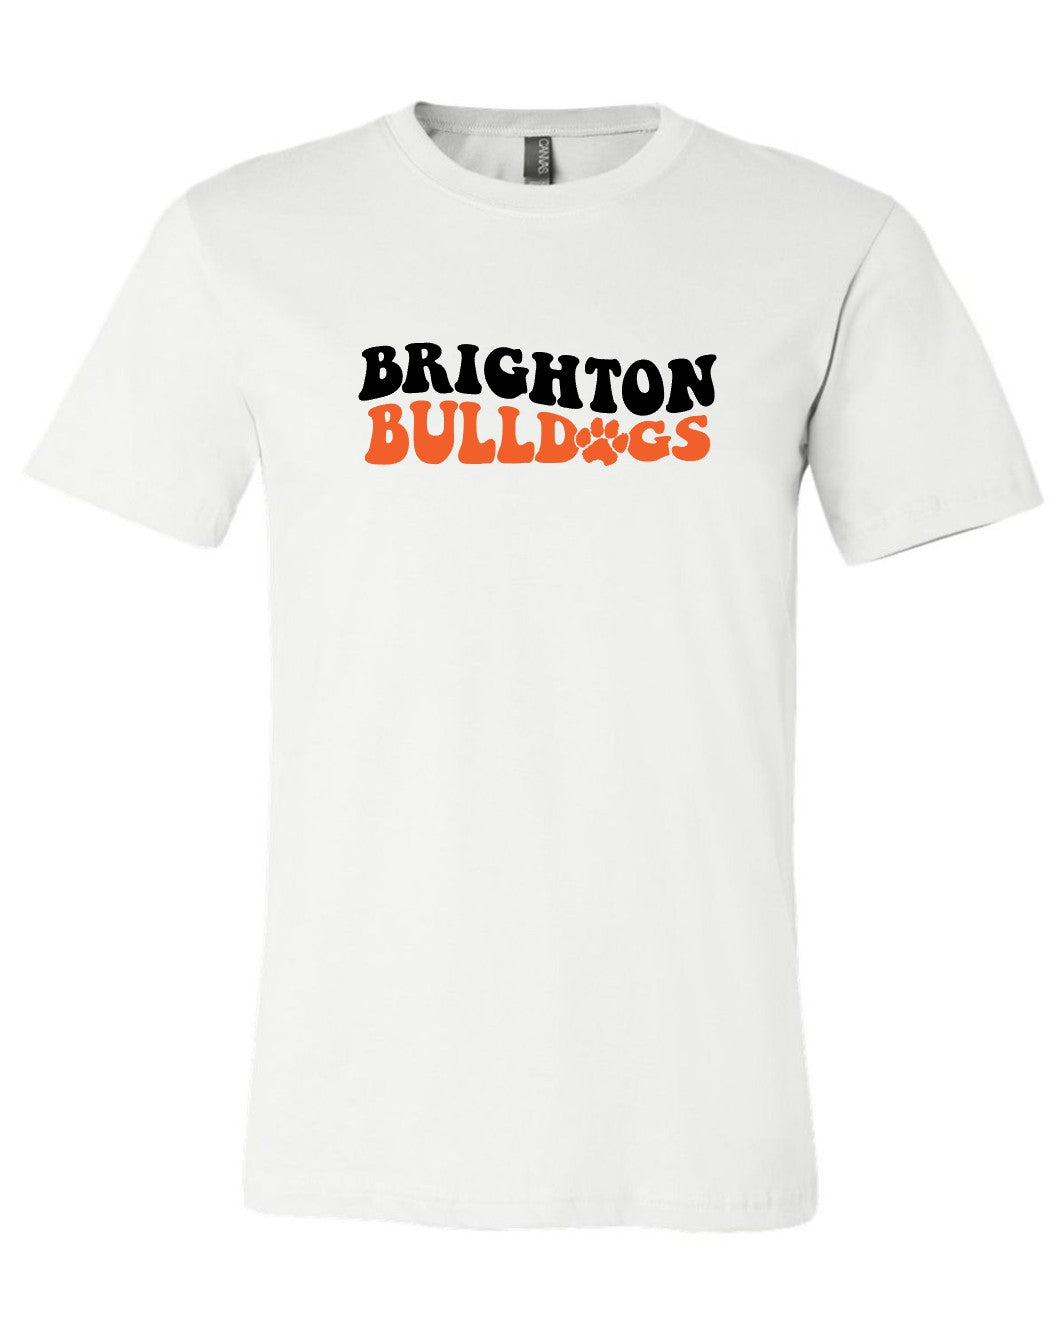 Brighton Bulldogs Wavy Premium Tee - B160